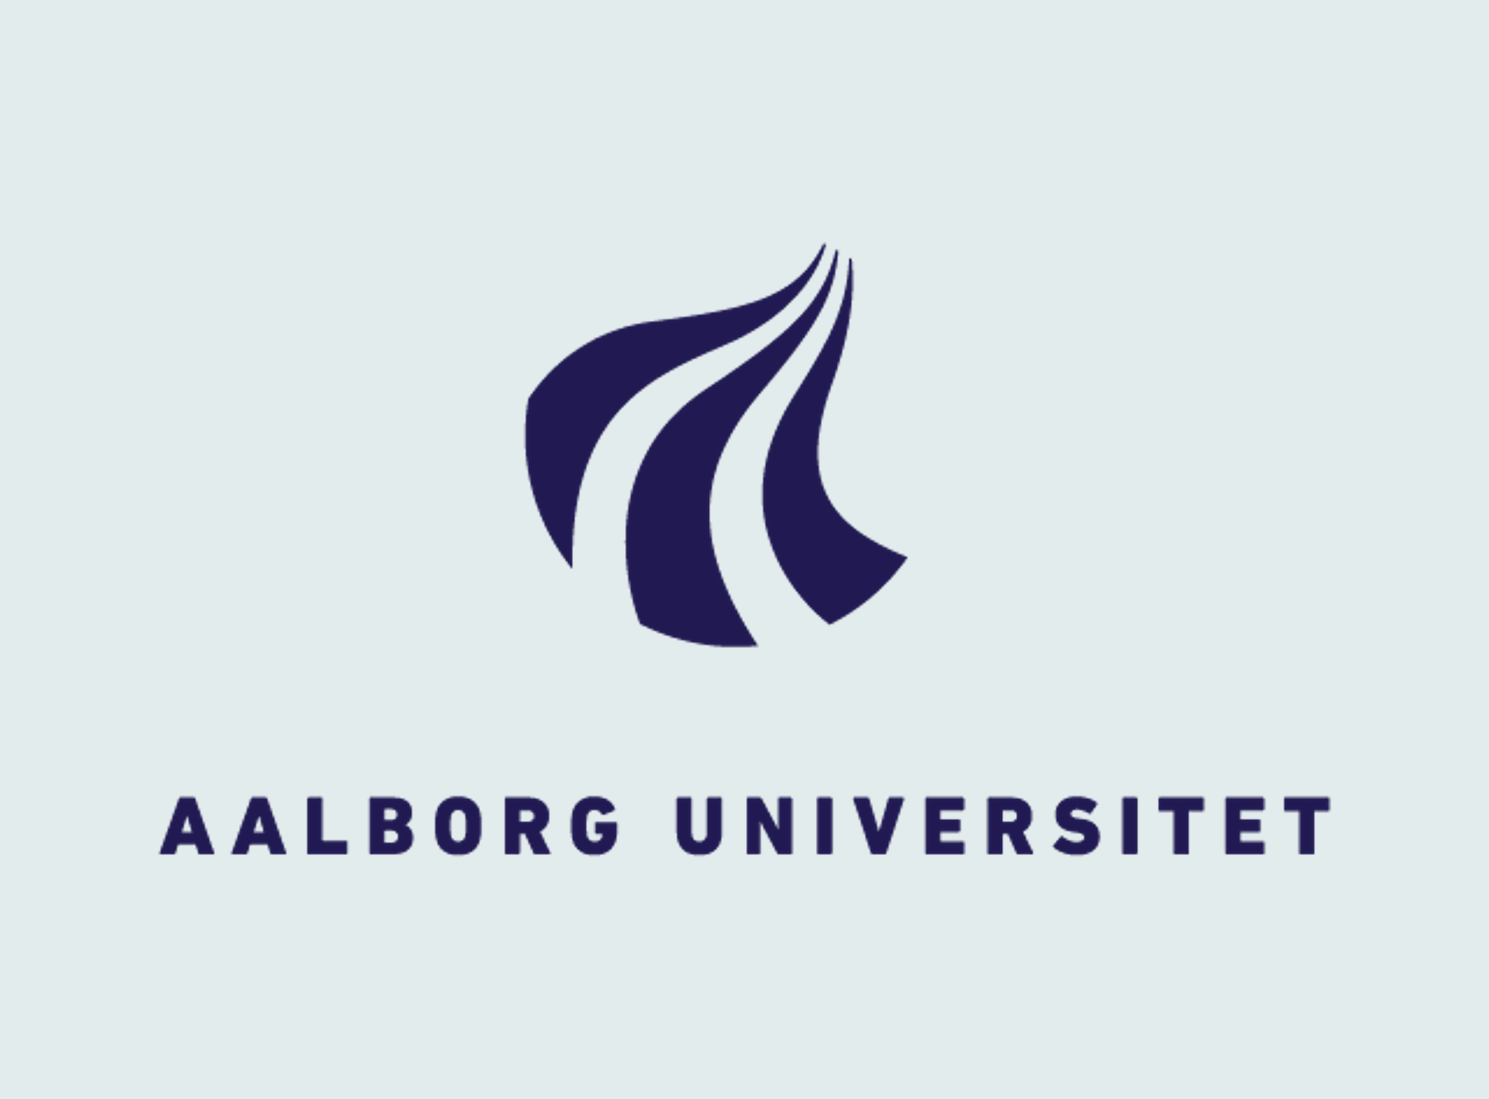 Aalborg universistet logo